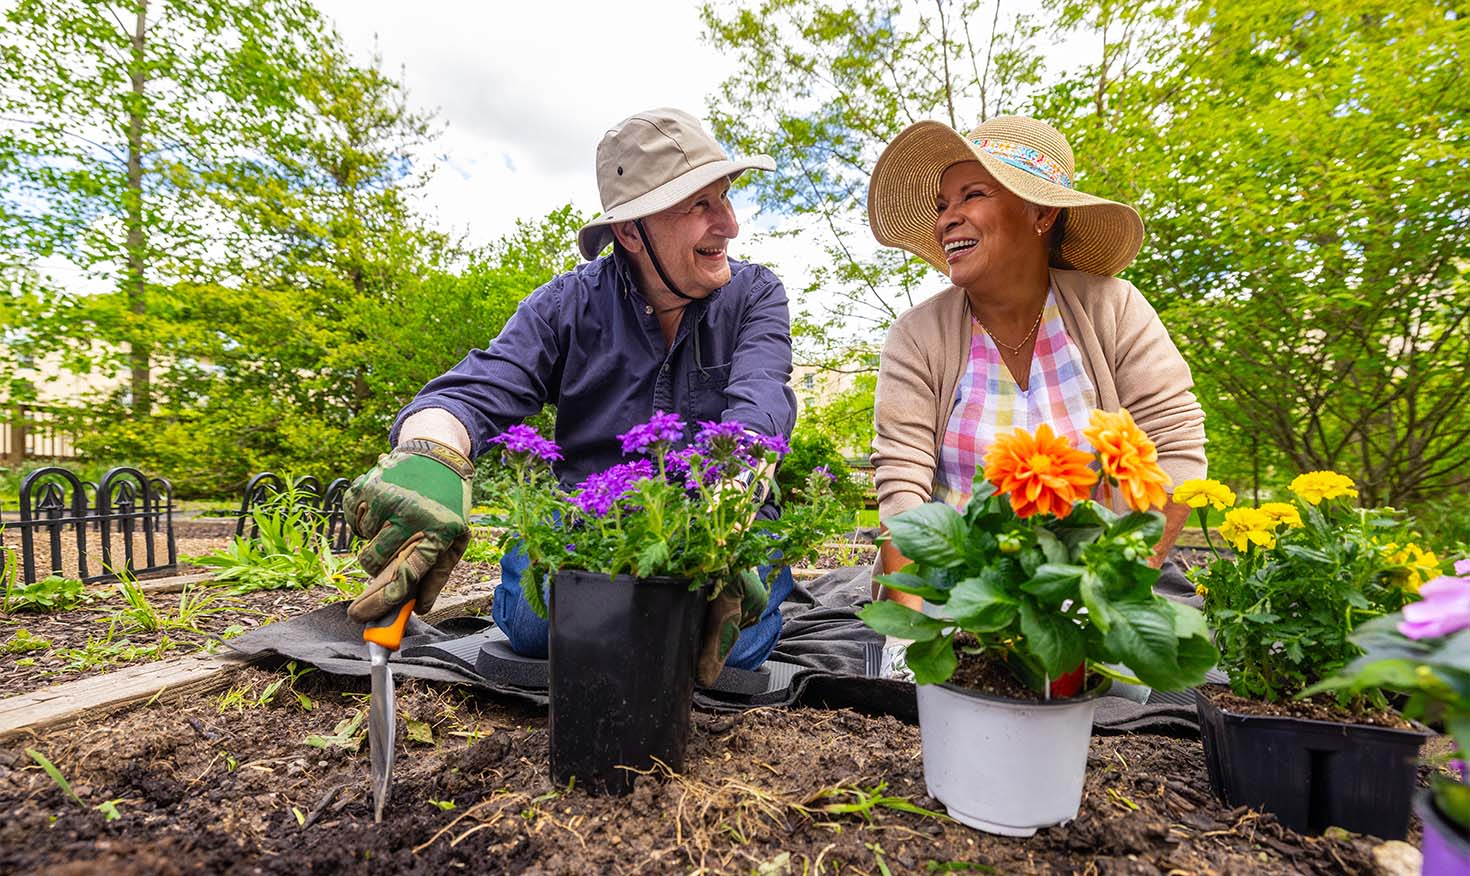 A senior man and woman wearing sun hats gardening